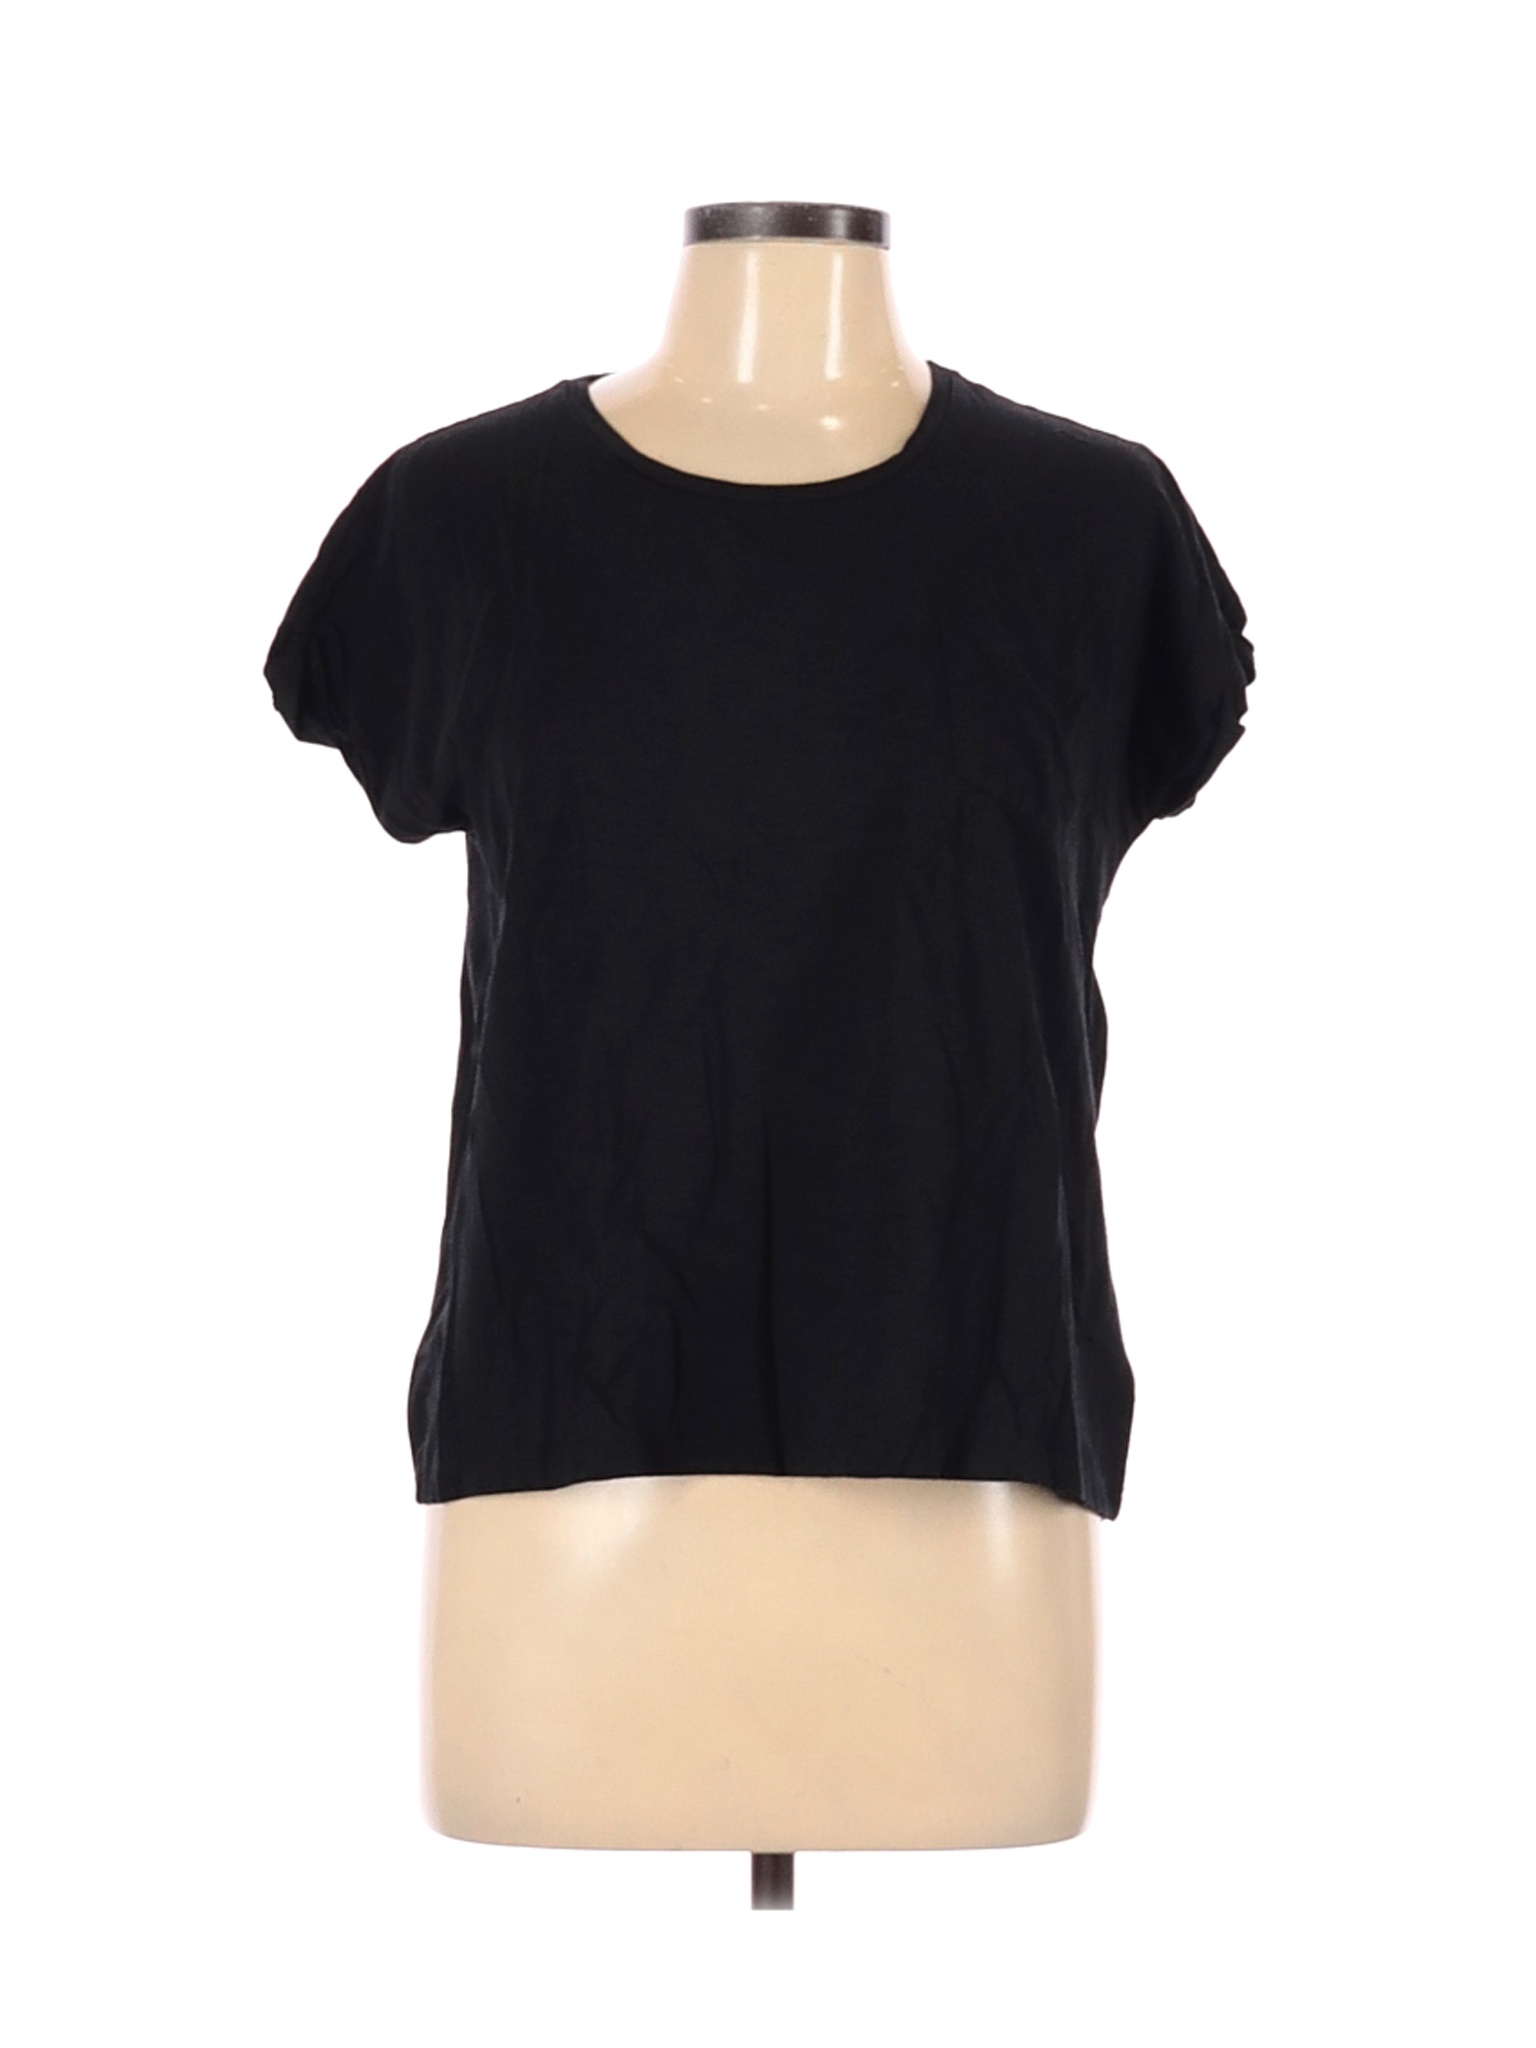 Sigrid Olsen Women Black Short Sleeve T-Shirt L | eBay